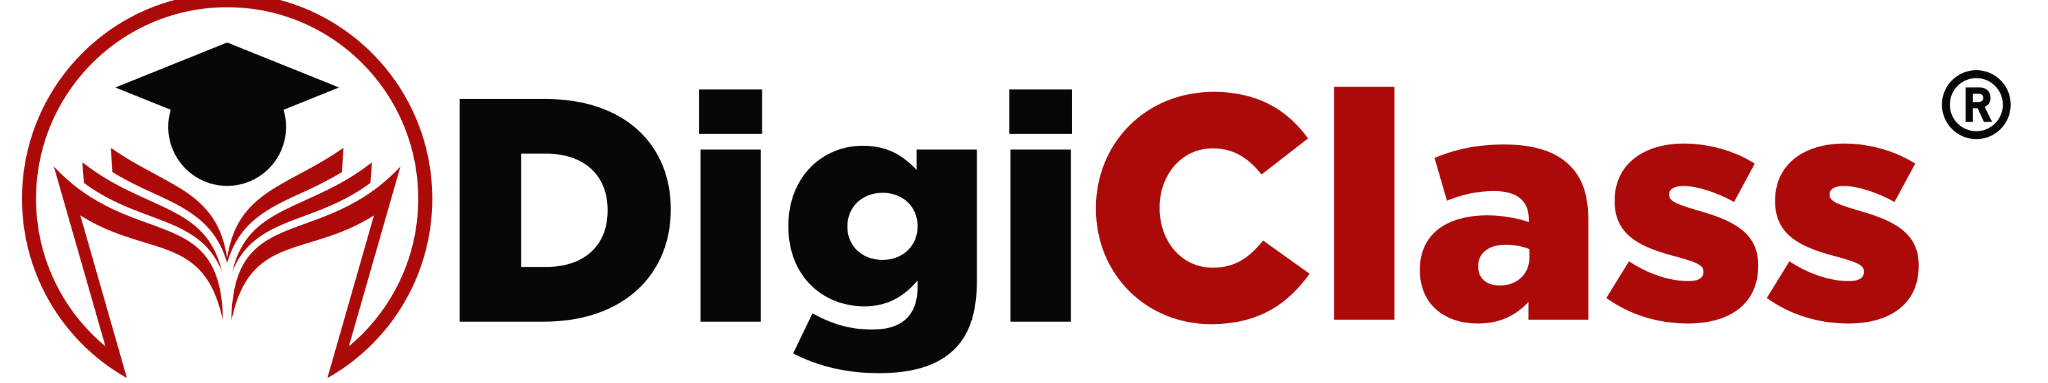 digiclass_logo